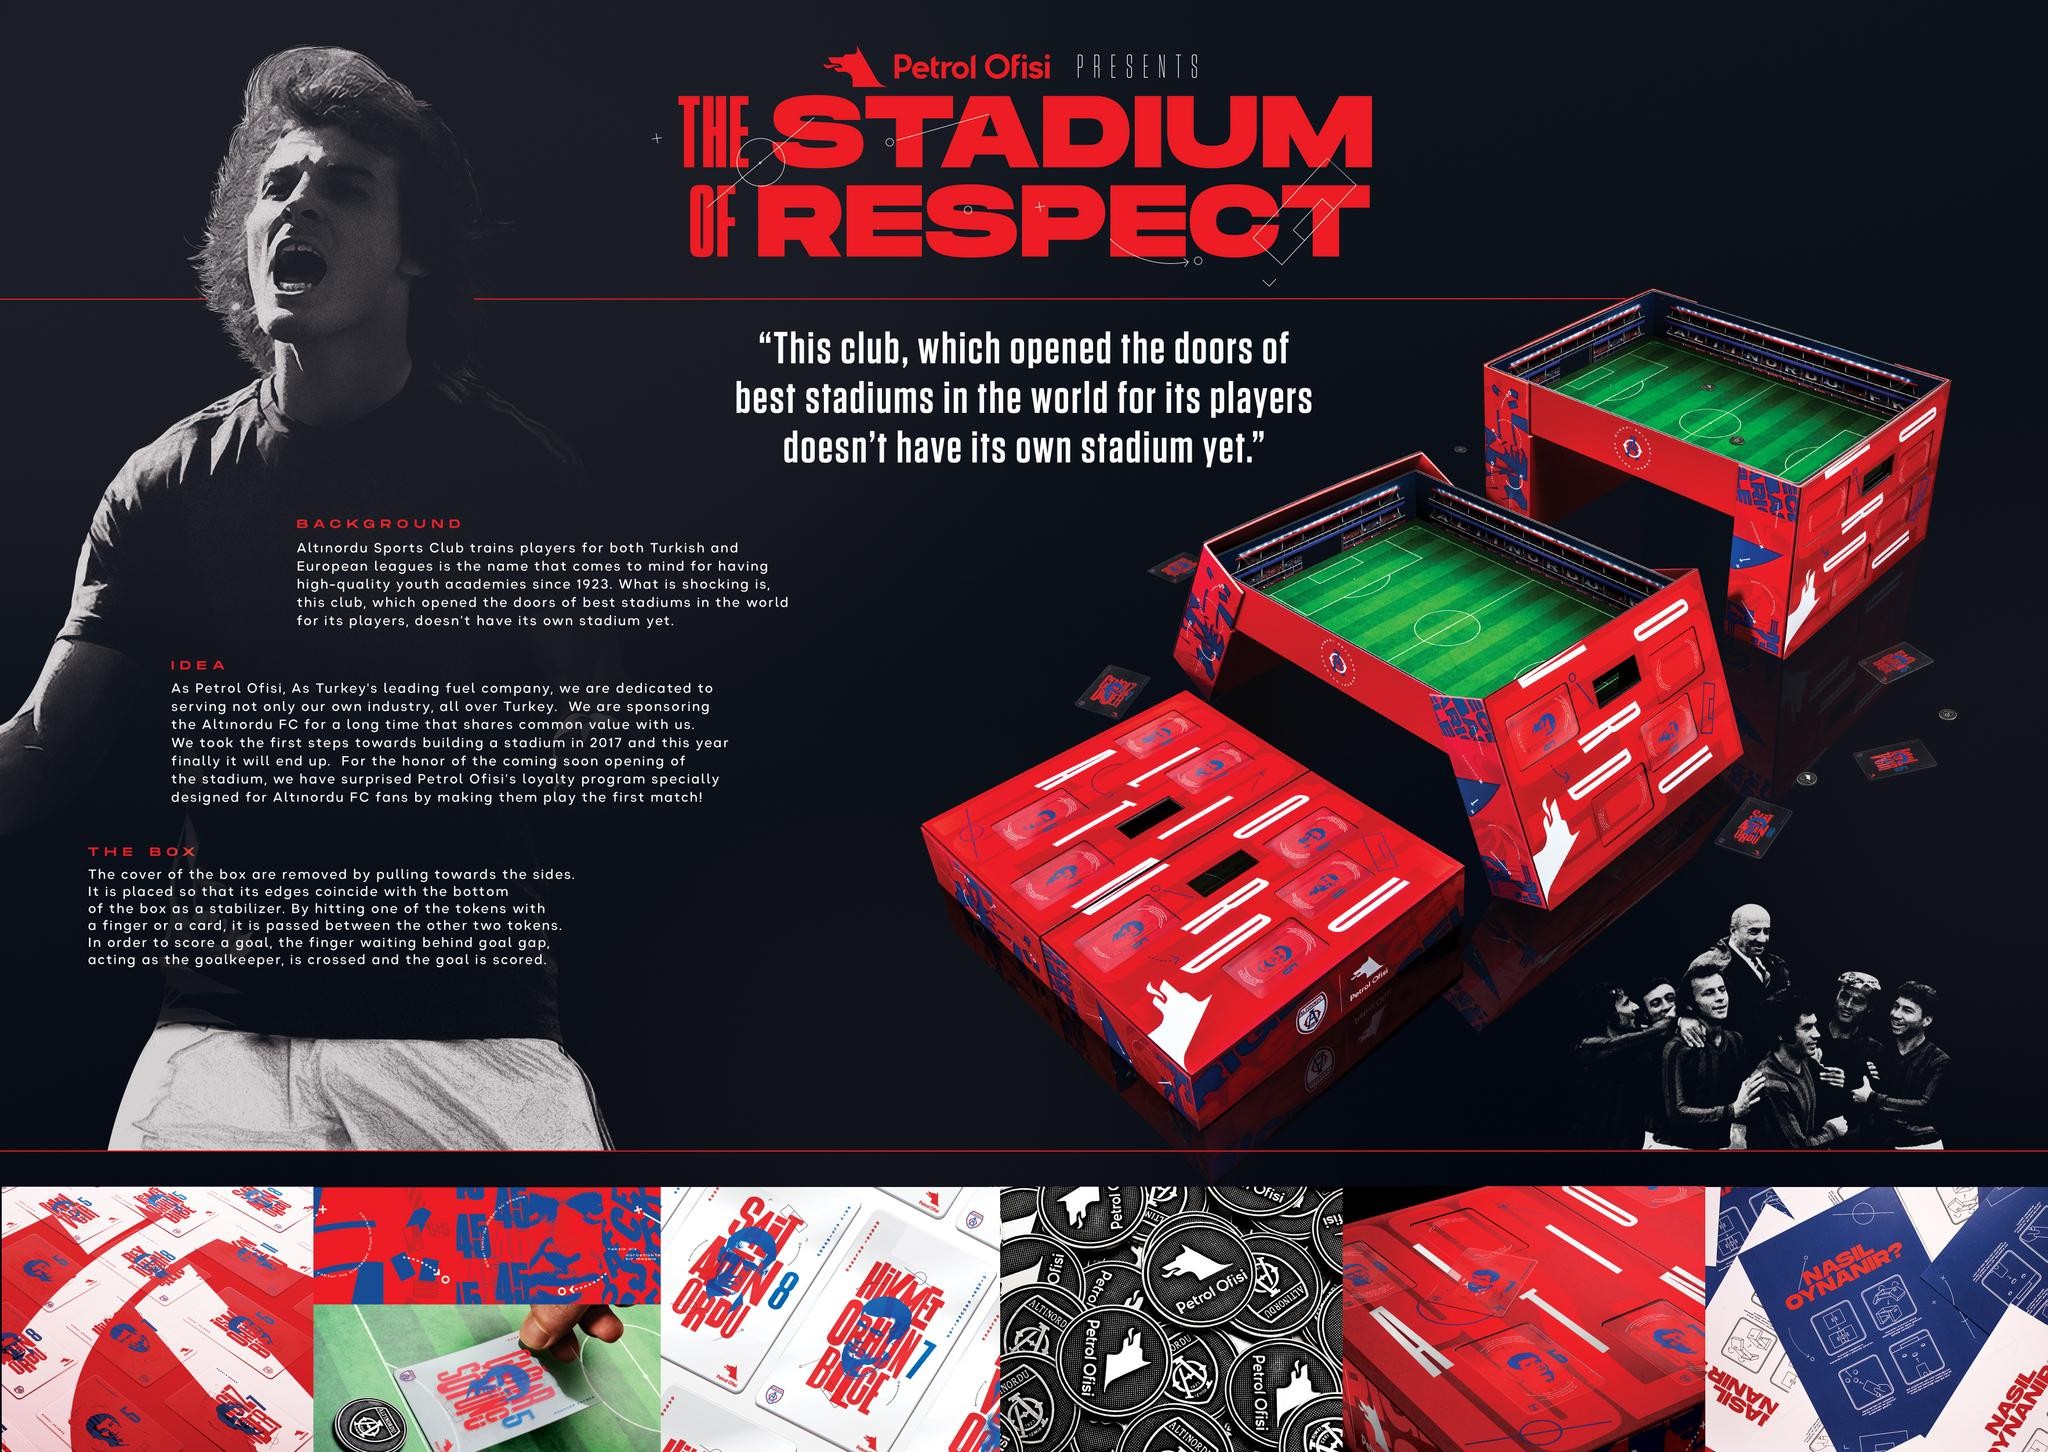 The Stadium of Respect